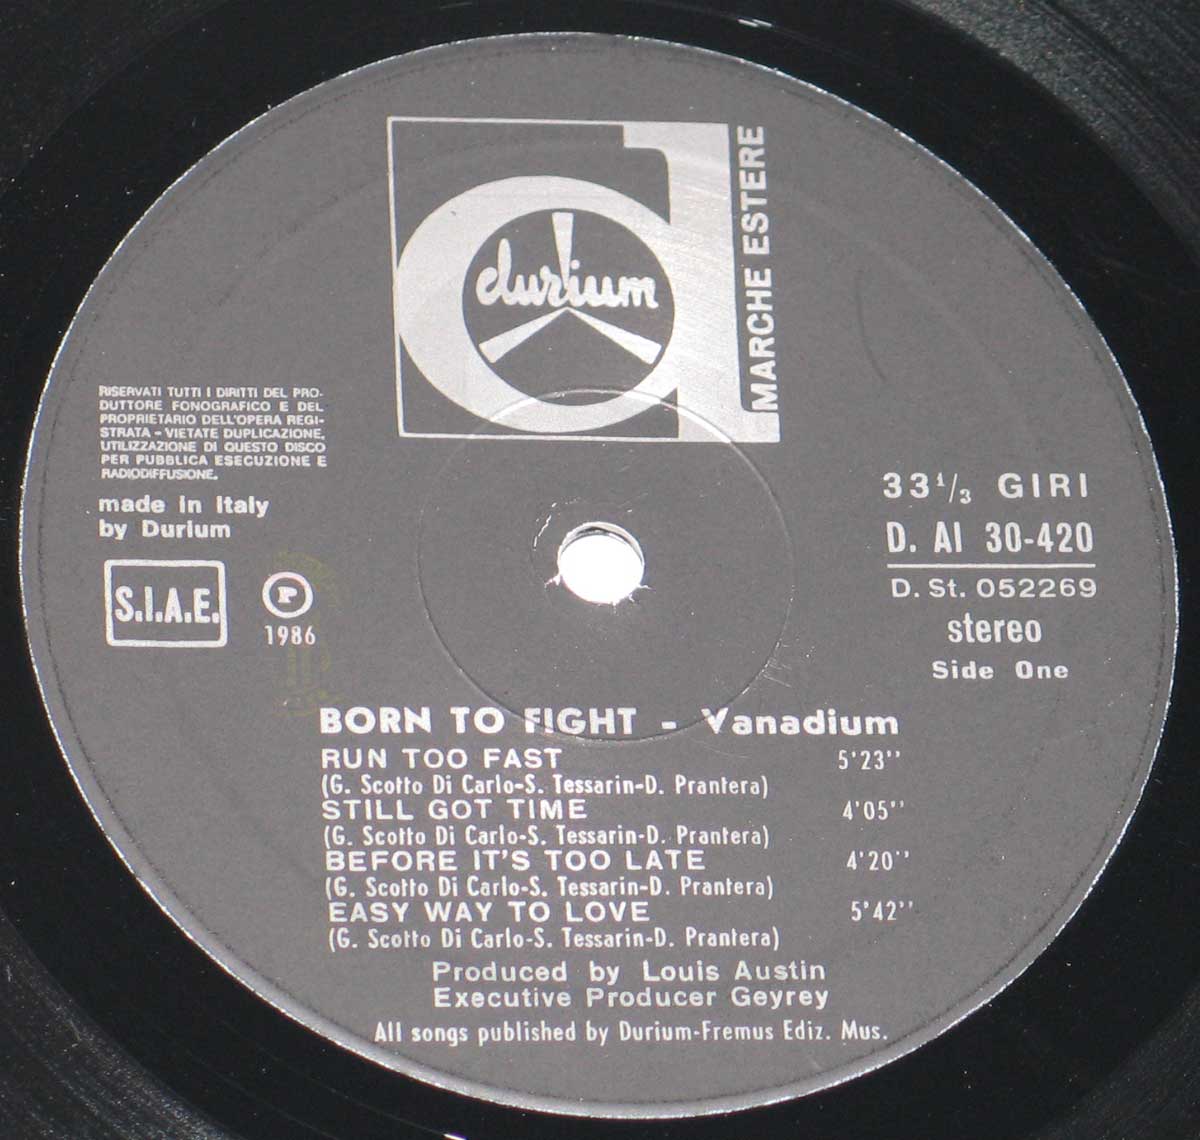 Close-up of the DURIUM record label  